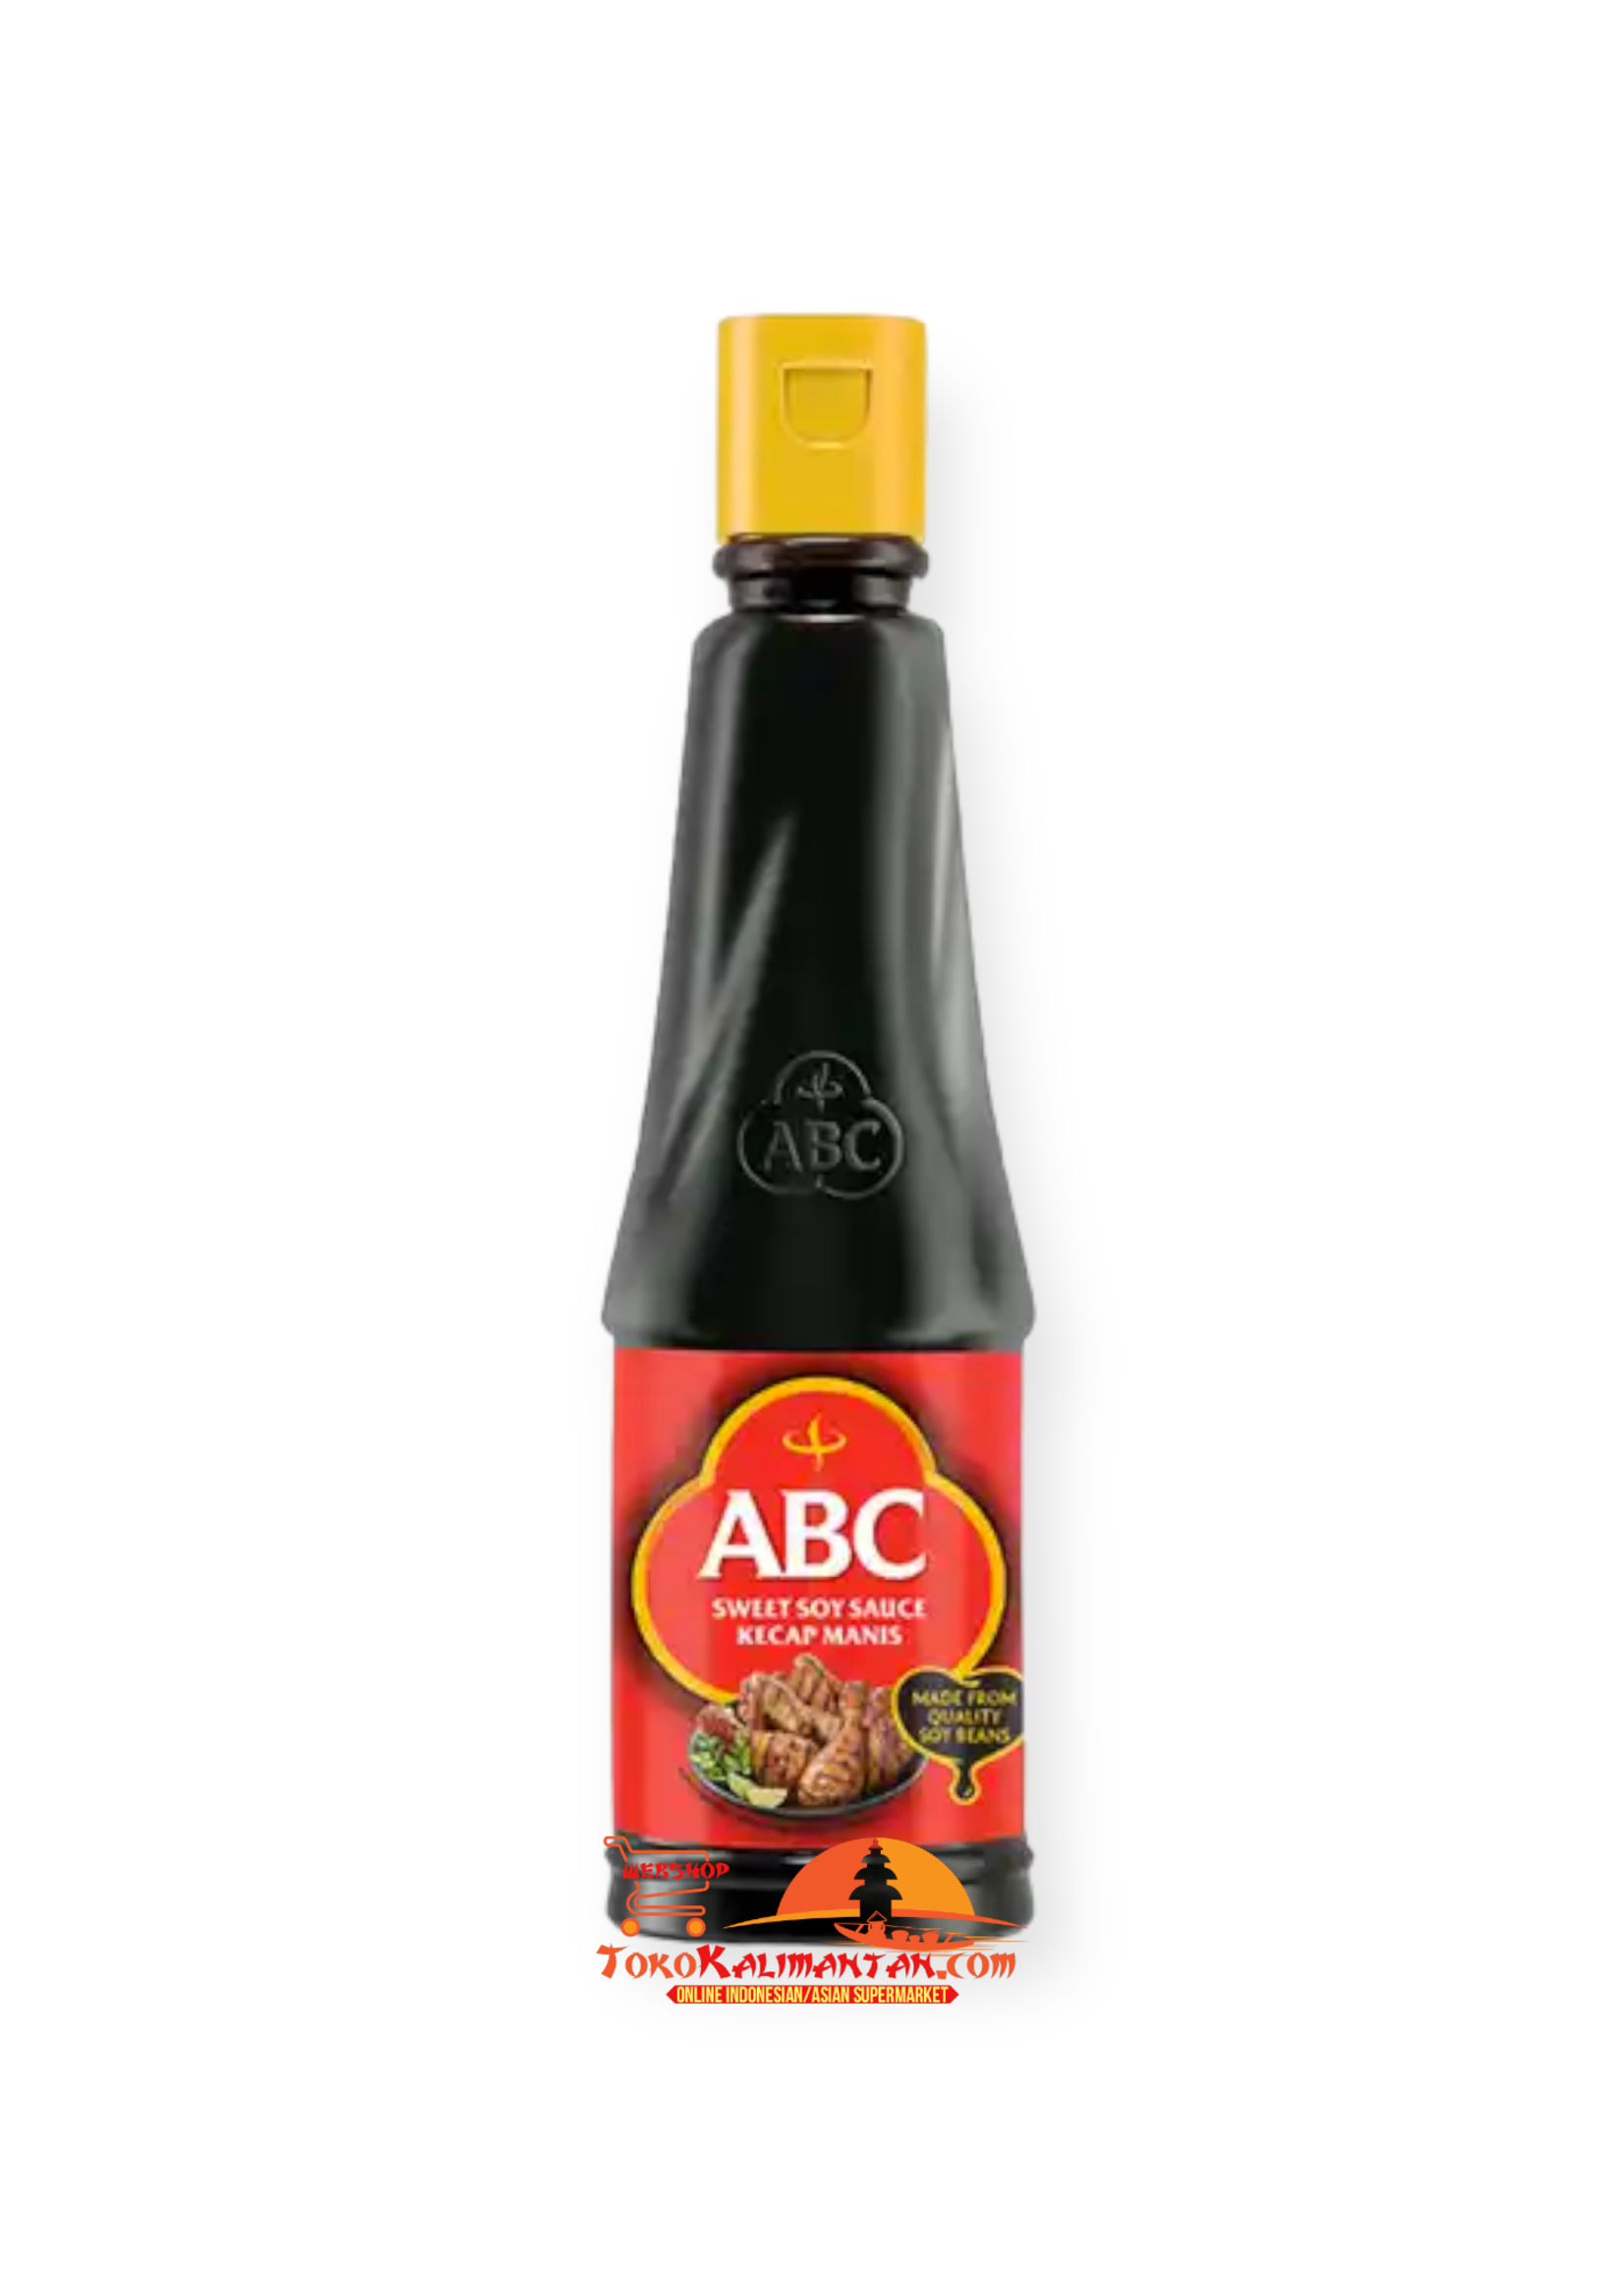 ABC ABC Sweet soy sauce ketjap manis 275 ml